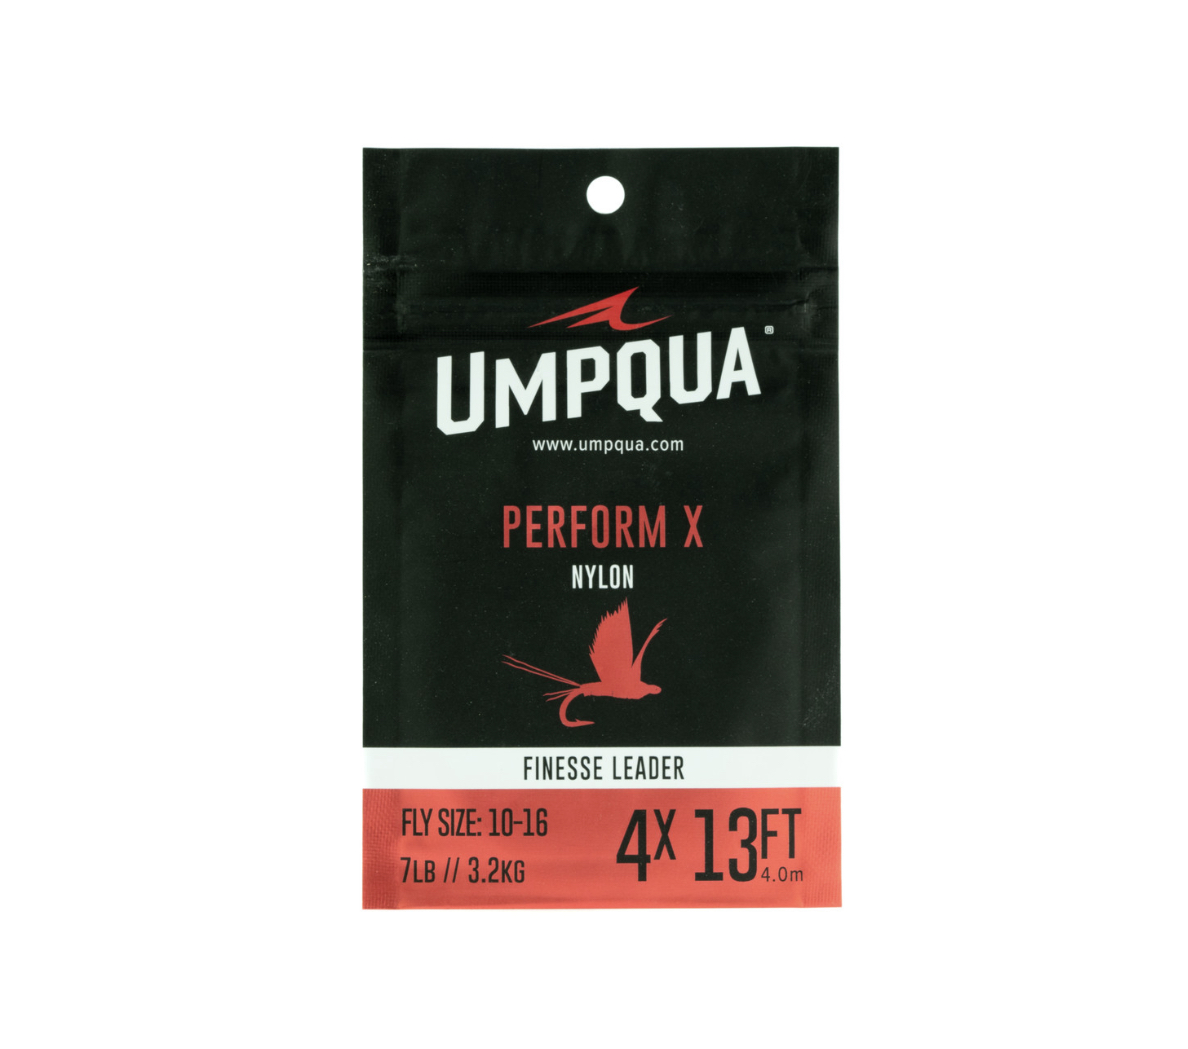 Umpqua Perform X Nylon Finesse Leader - 13ft - 4X - 7lb